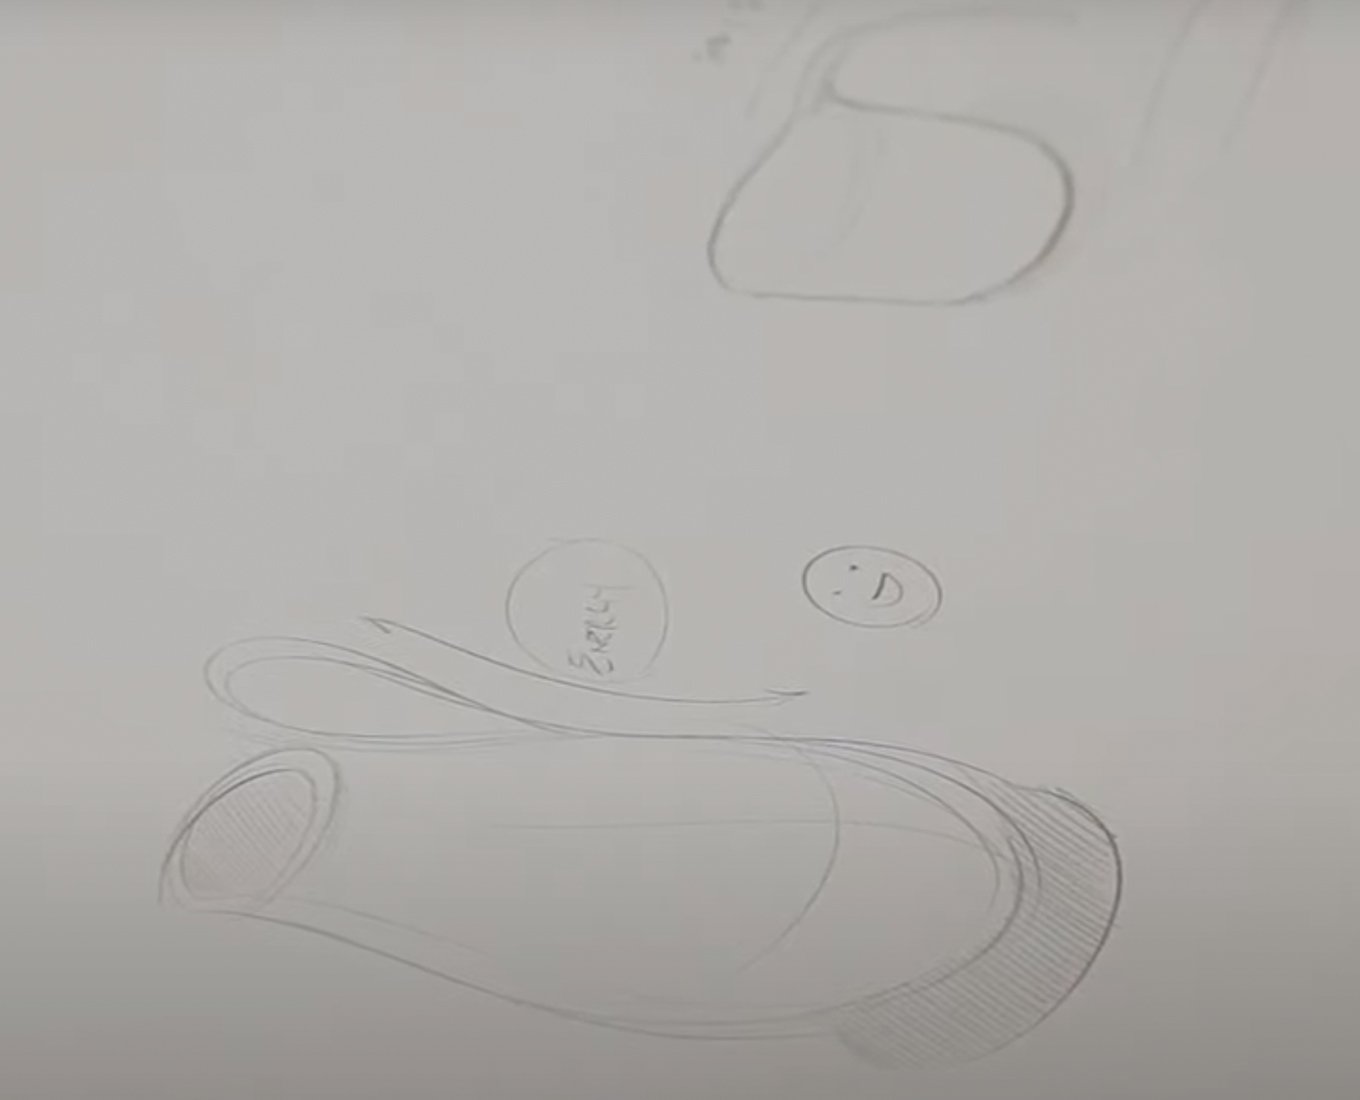 Closeup of a vase and a smiley face pencil sketch.